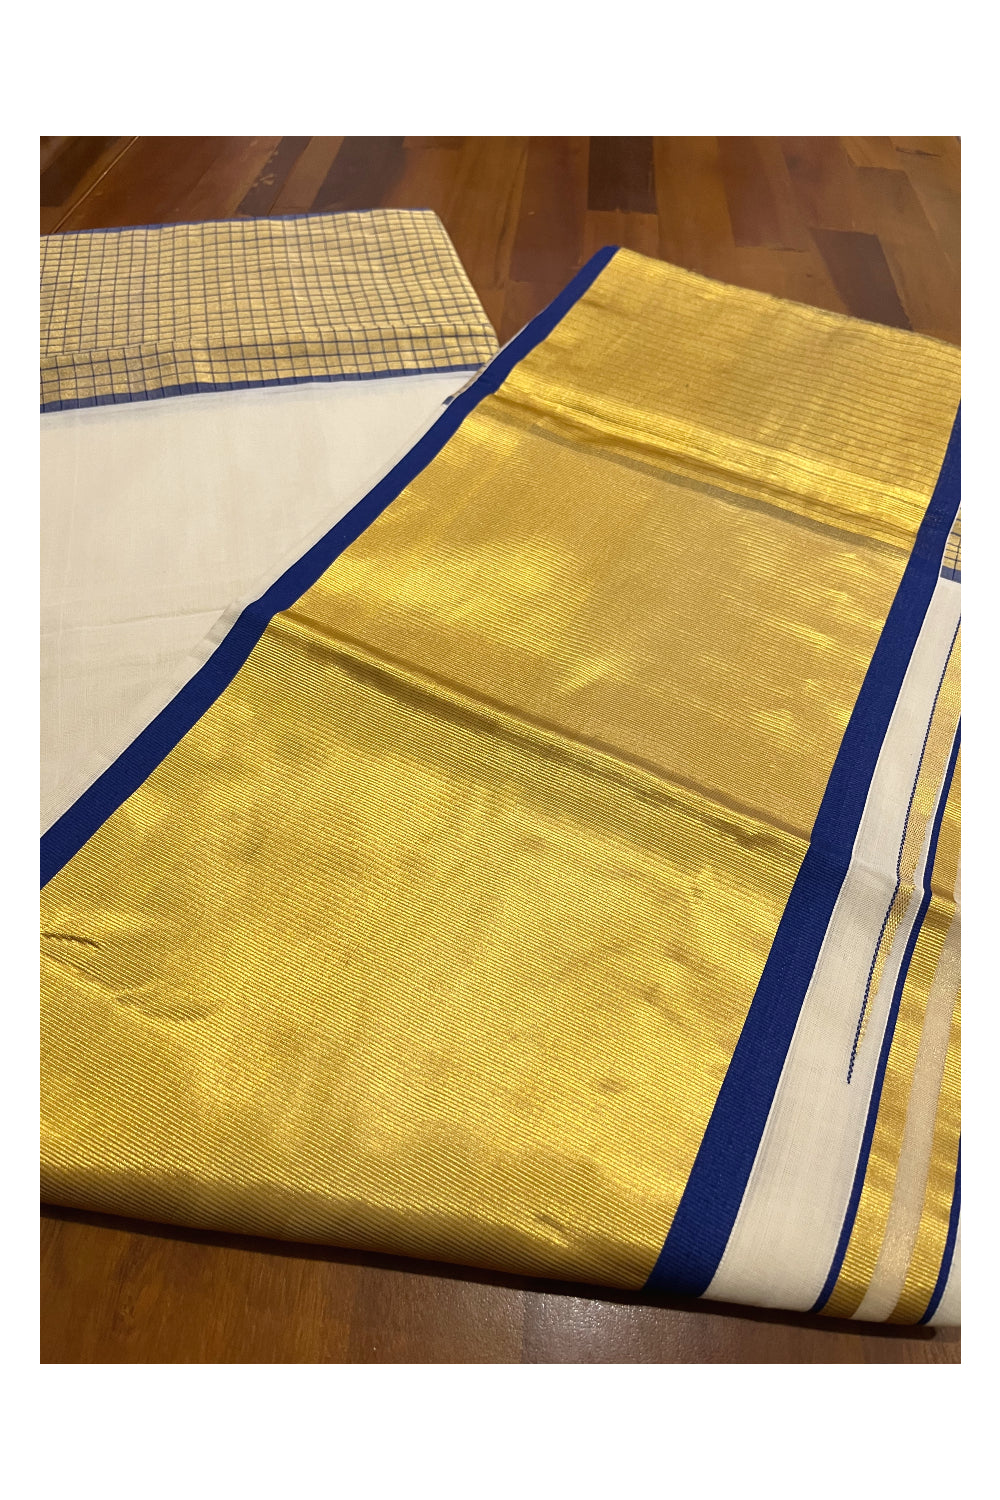 Southloom Handloom Premium Cotton Saree with Blue and Kasavu Check Design Border